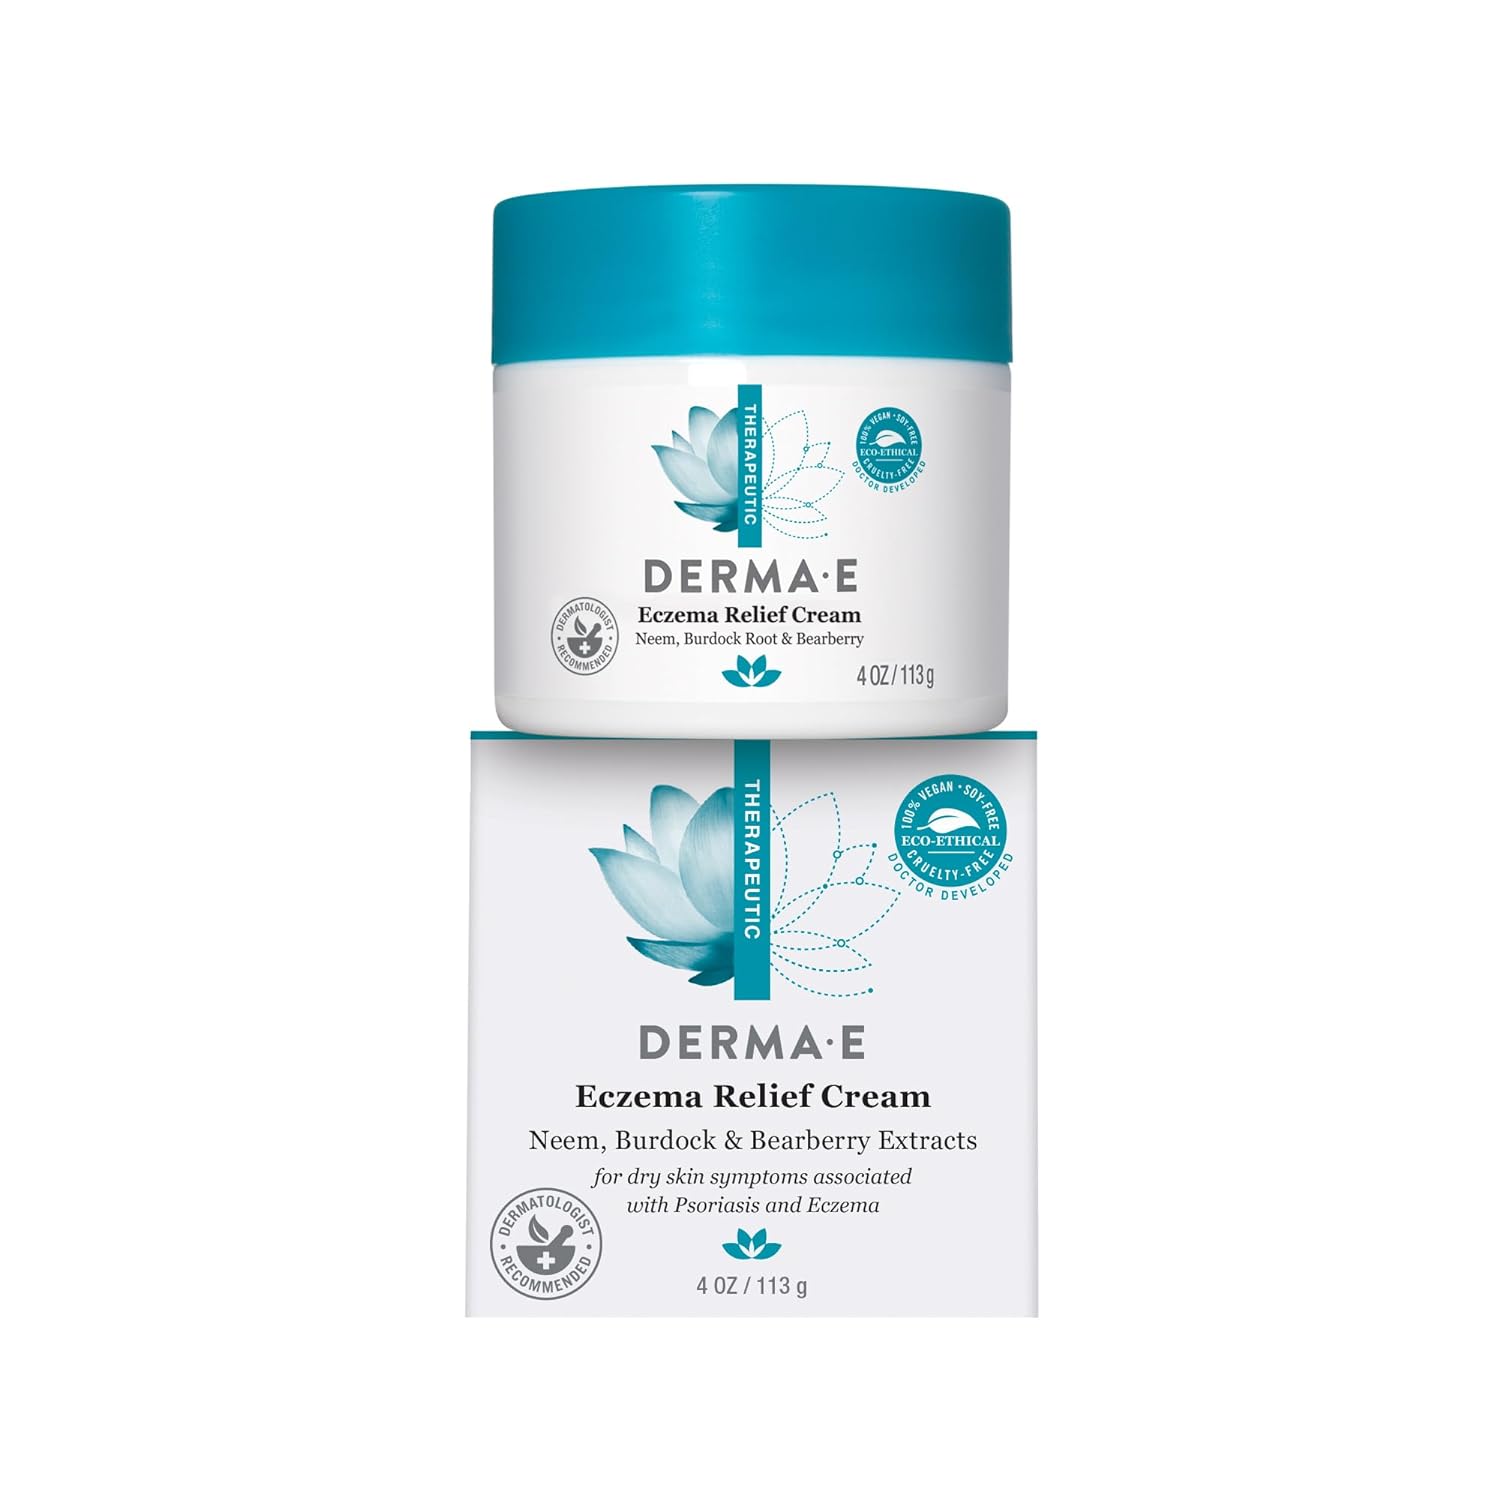 DERMA-E Eczema Relief Cream ? All Natural Itch Relief Cream ? Soothing Eczema Cream Relieves Flaky, Scaly and Dry Skin - Antioxidant-Rich Topical Eczema and Psoriasis Cream, 4oz